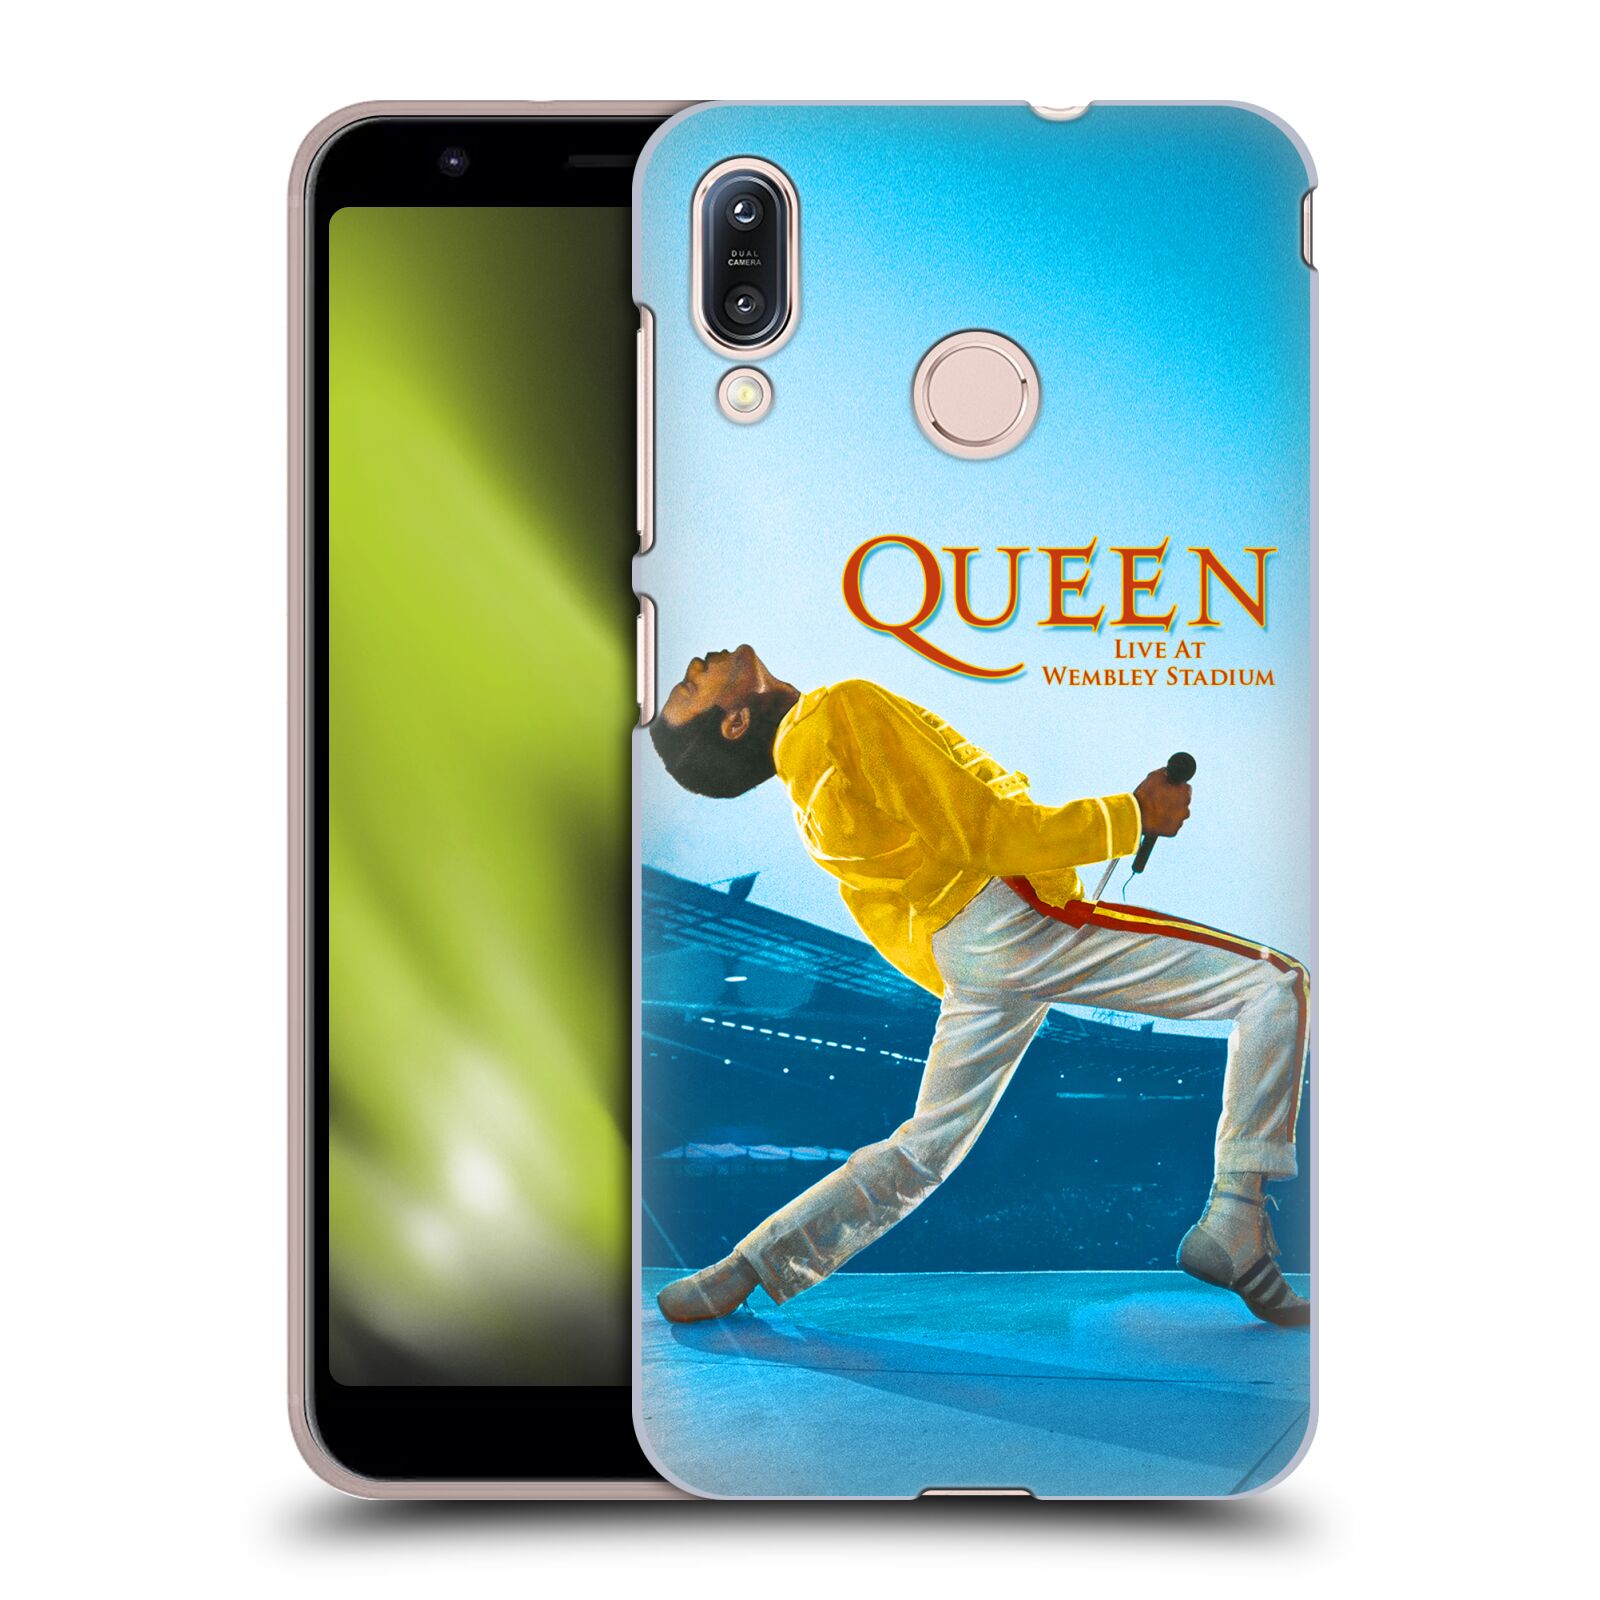 Pouzdro na mobil Asus Zenfone Max M1 (ZB555KL) - HEAD CASE - zpěvák Queen skupina Freddie Mercury